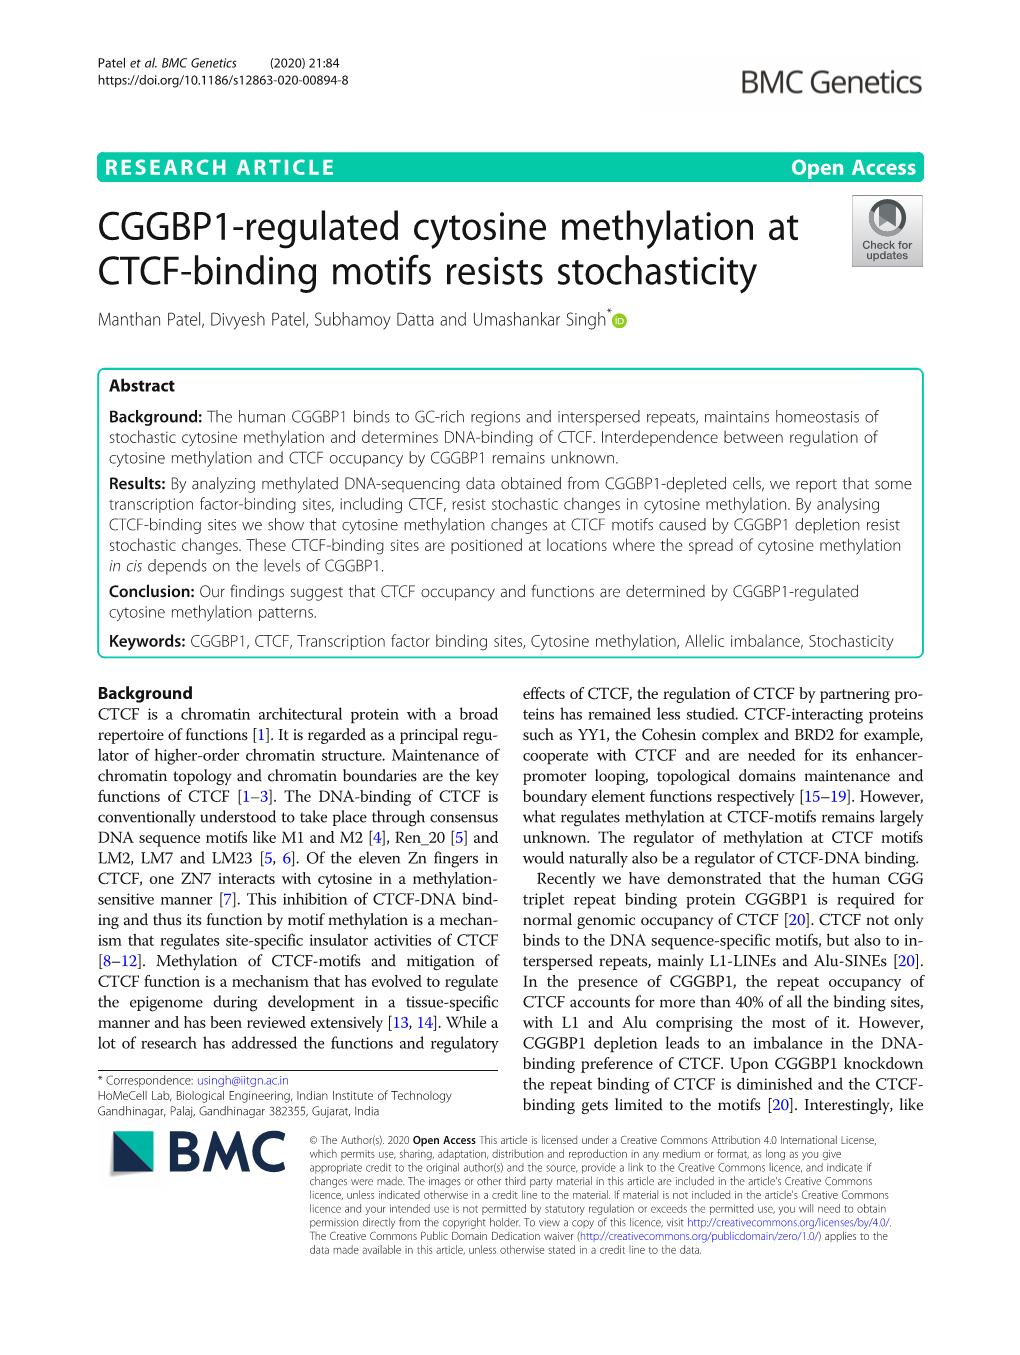 CGGBP1-Regulated Cytosine Methylation at CTCF-Binding Motifs Resists Stochasticity Manthan Patel, Divyesh Patel, Subhamoy Datta and Umashankar Singh*